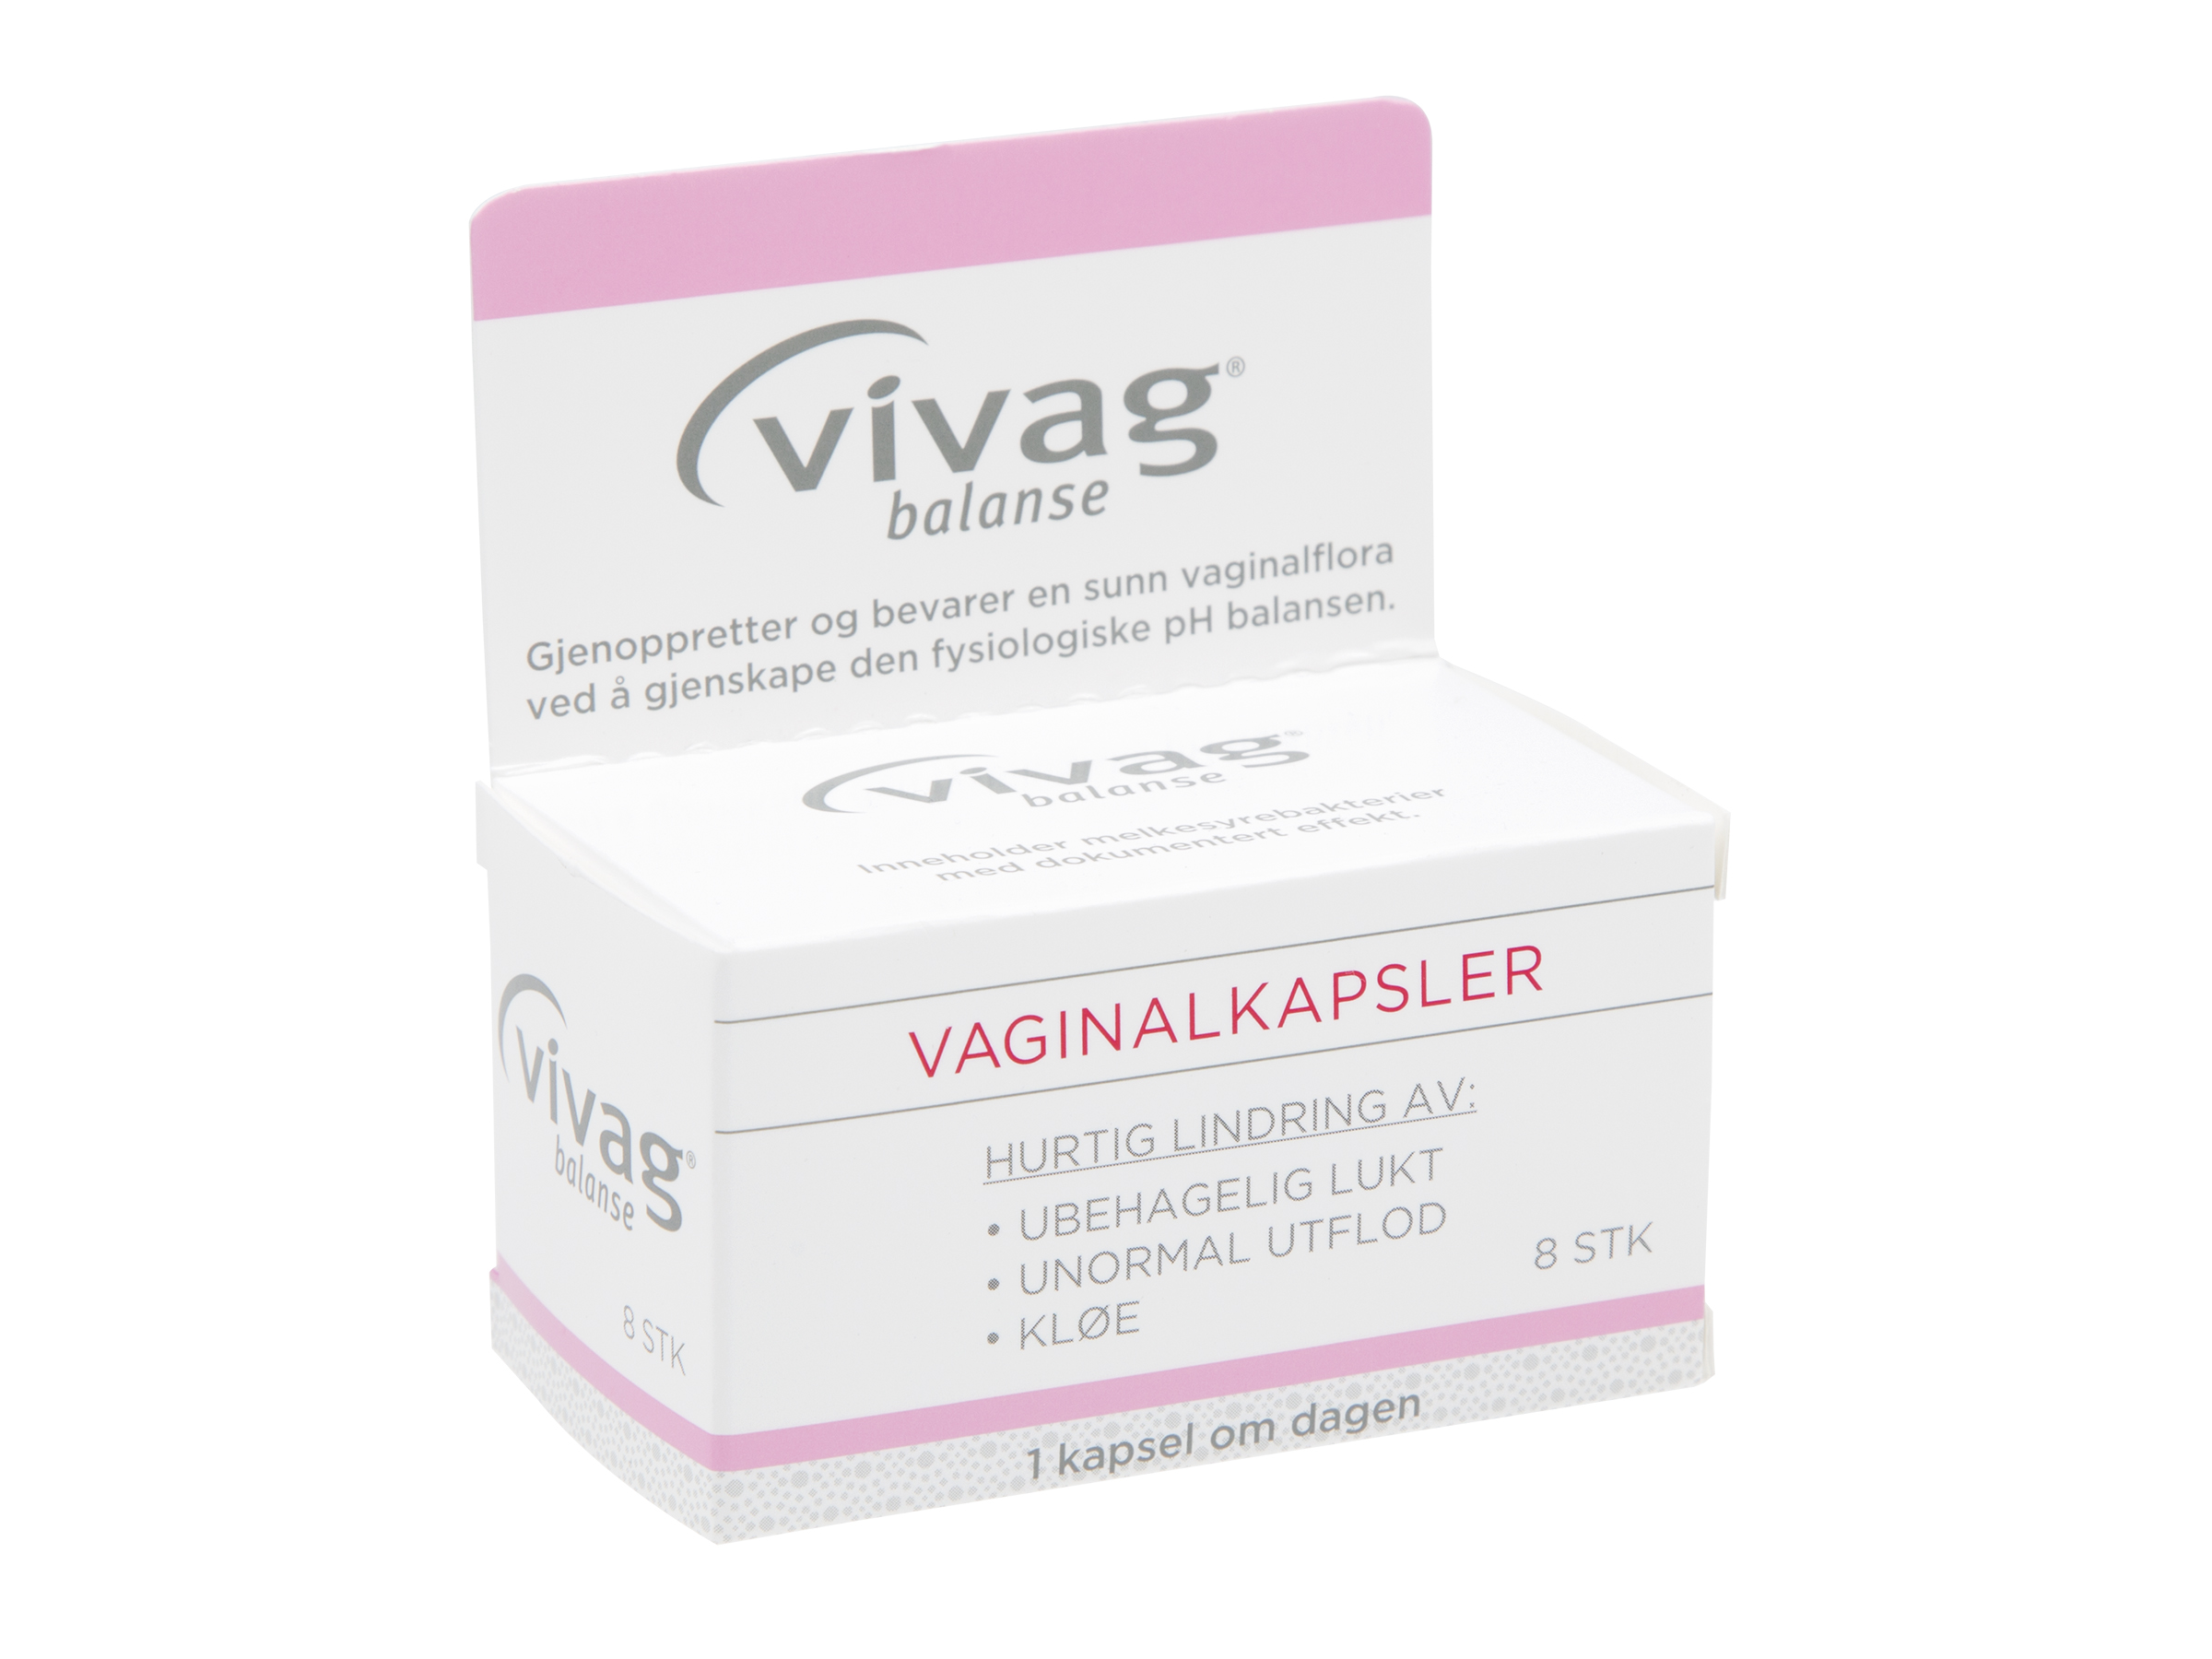 Vivag Balanse Vaginalkapsler, 8 stk.